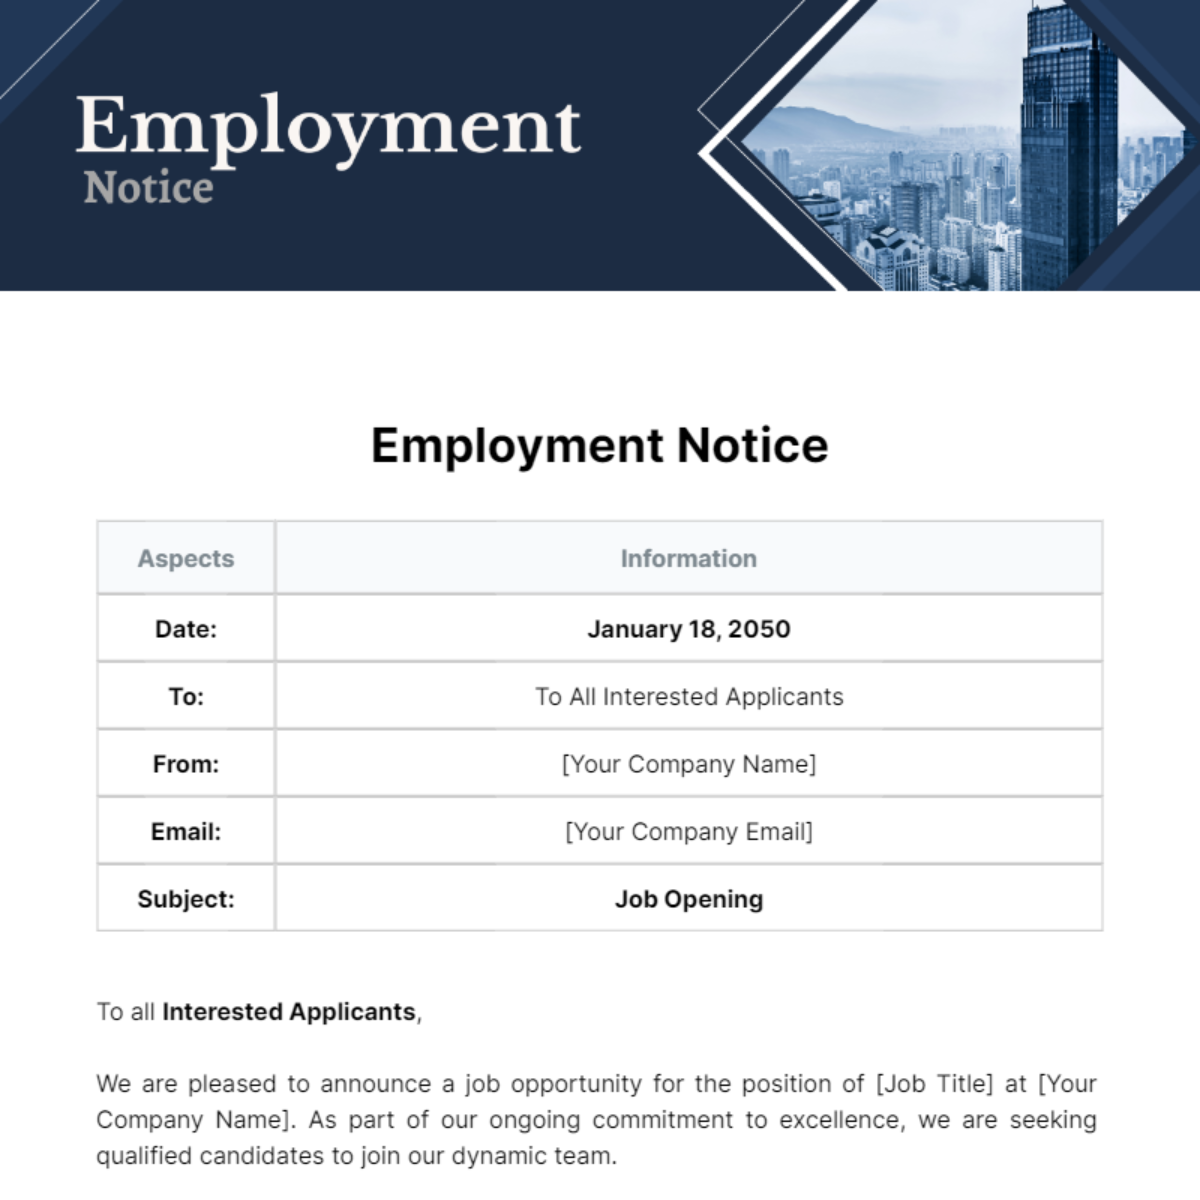 Employment Notice Template